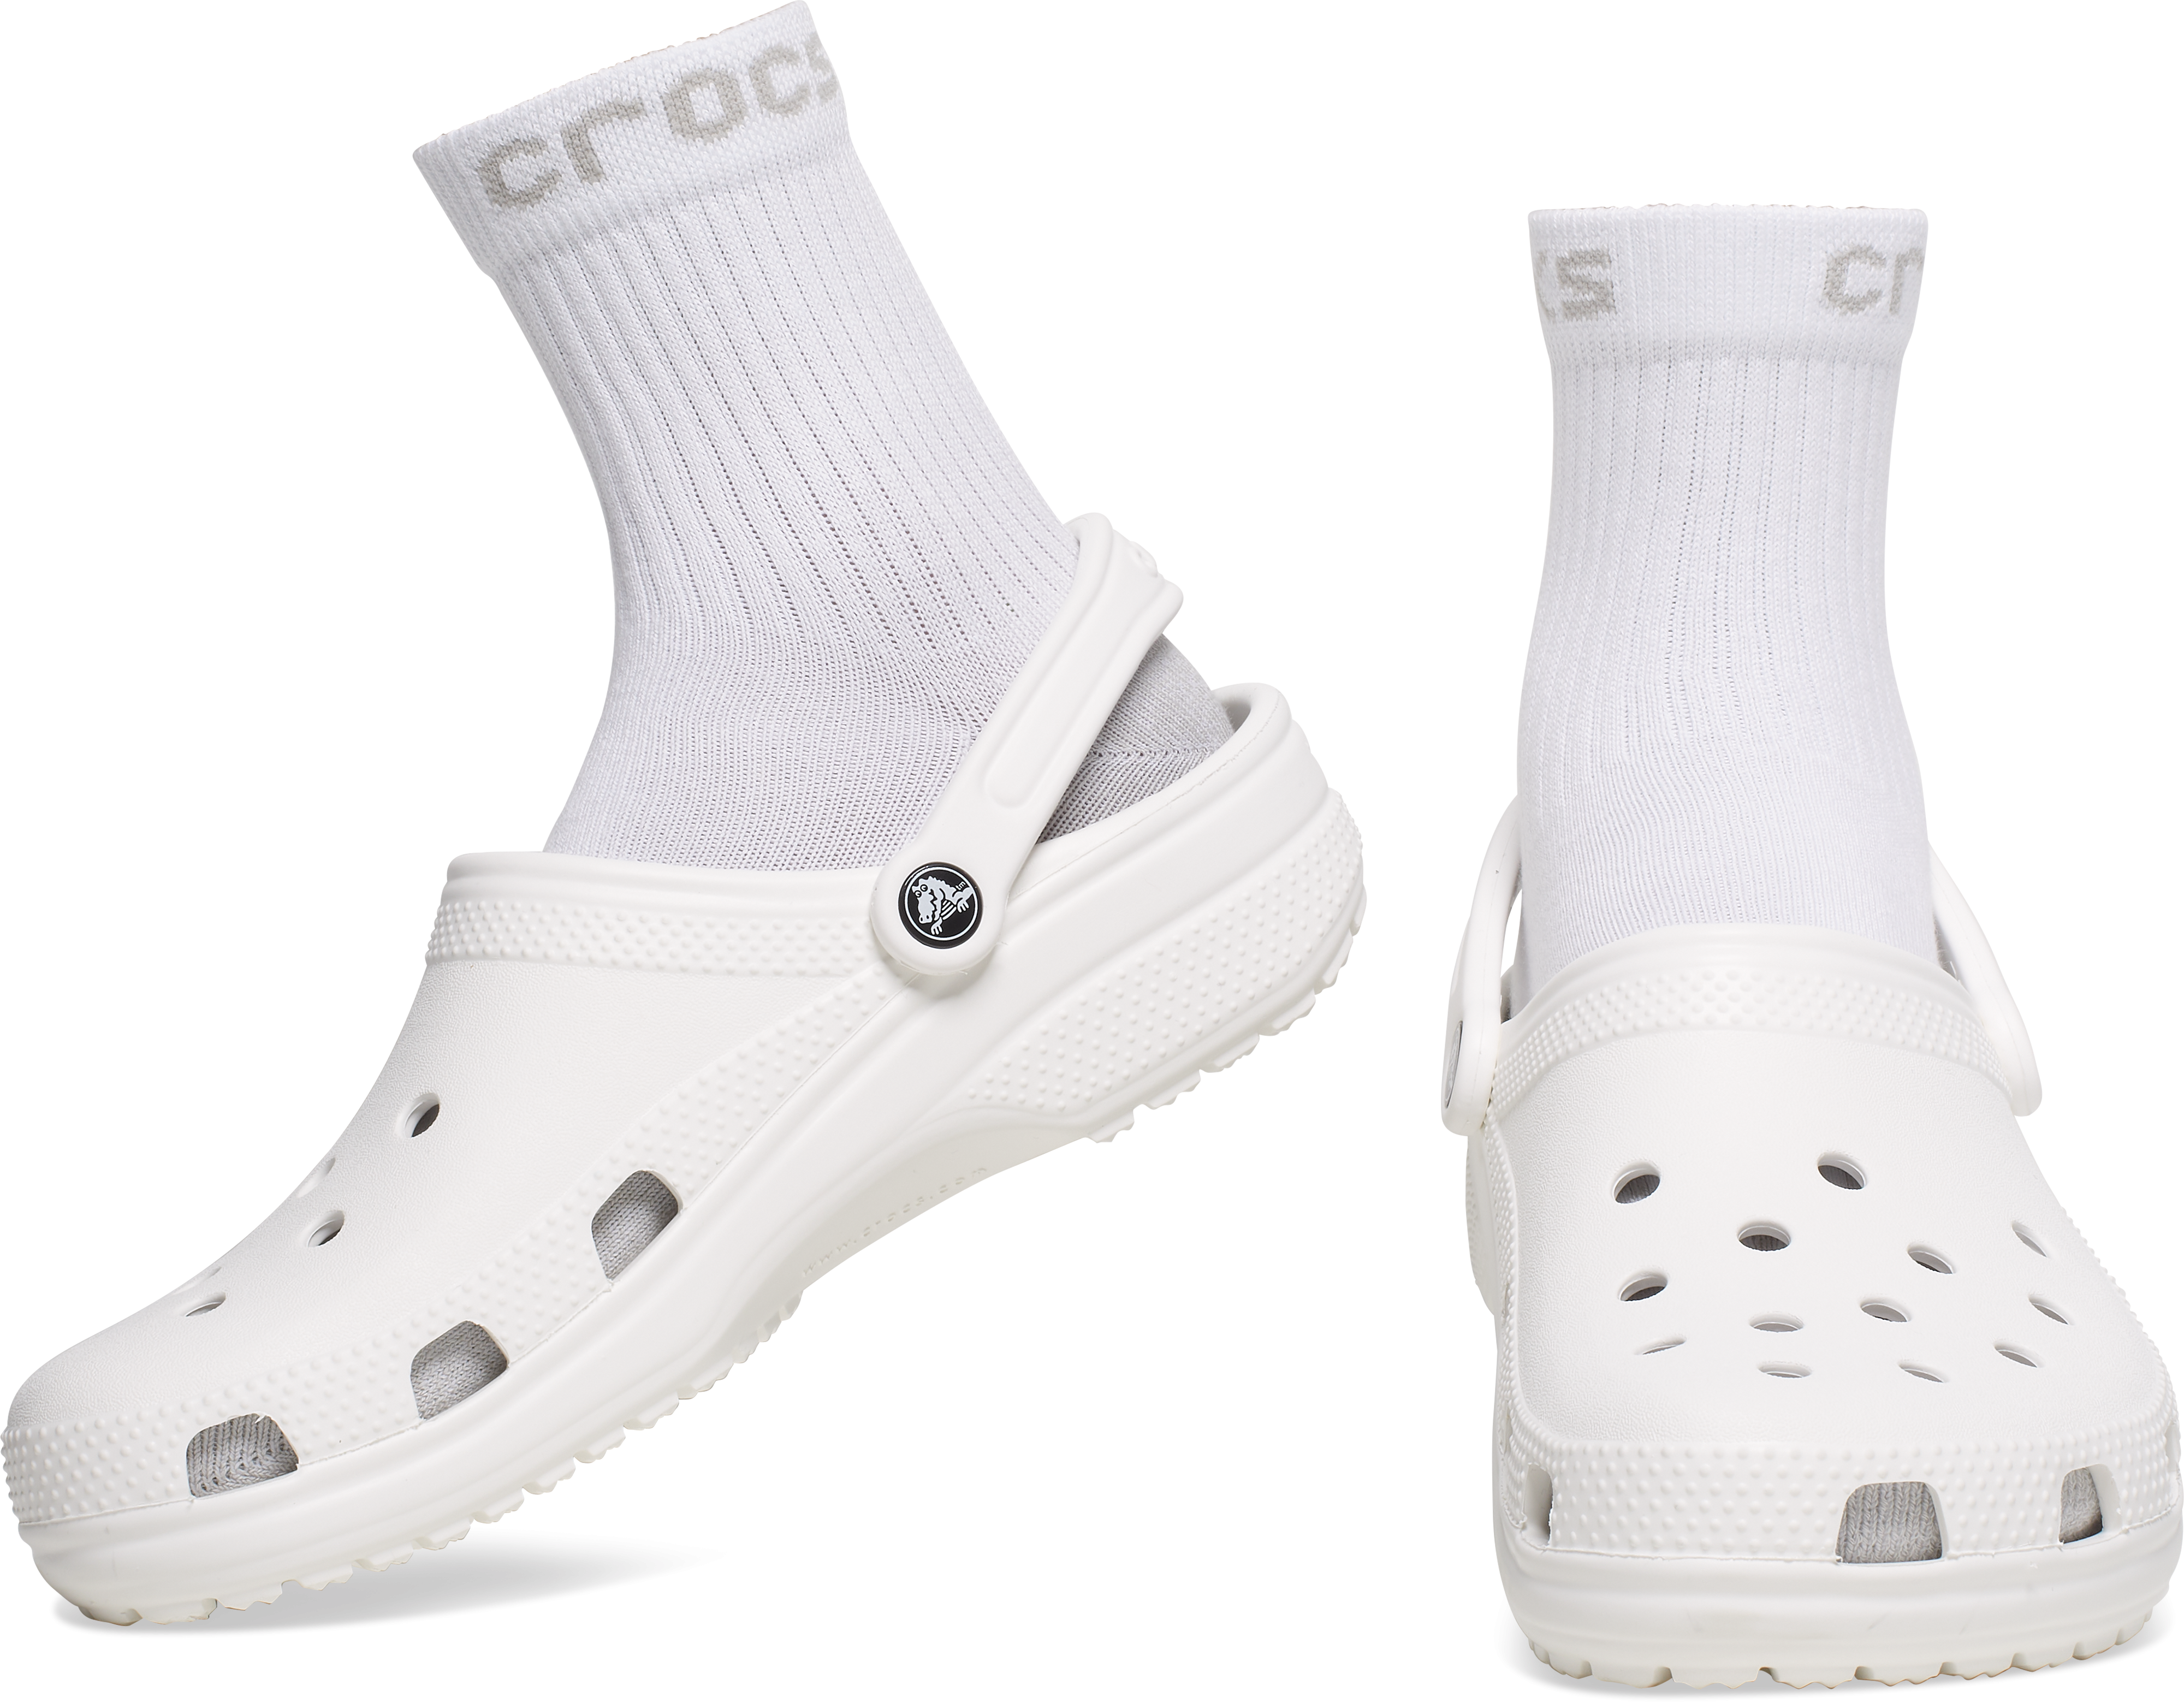 Crocs socks adult quarter sol 3 pack